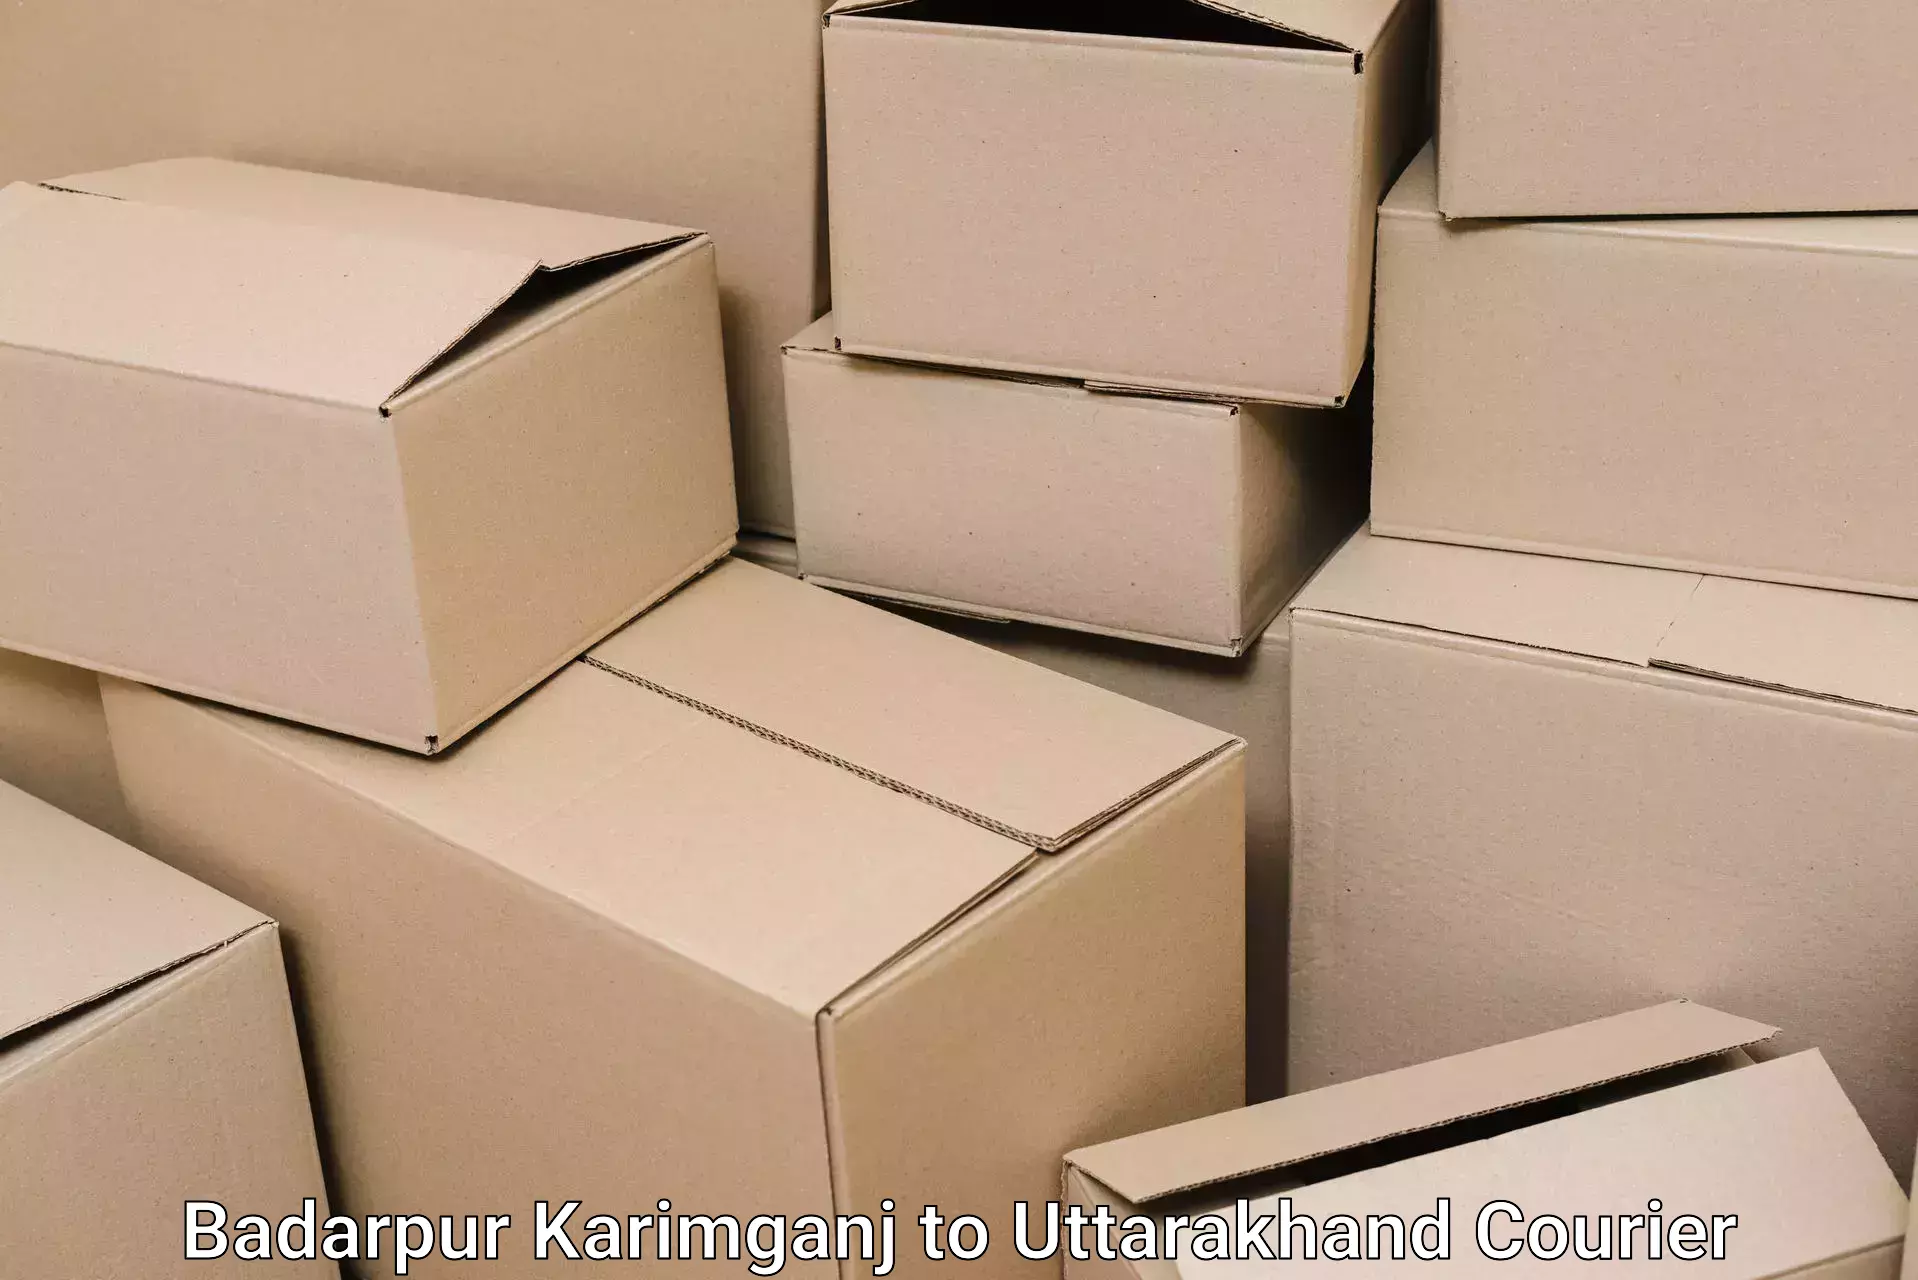 Moving and packing experts Badarpur Karimganj to Haldwani